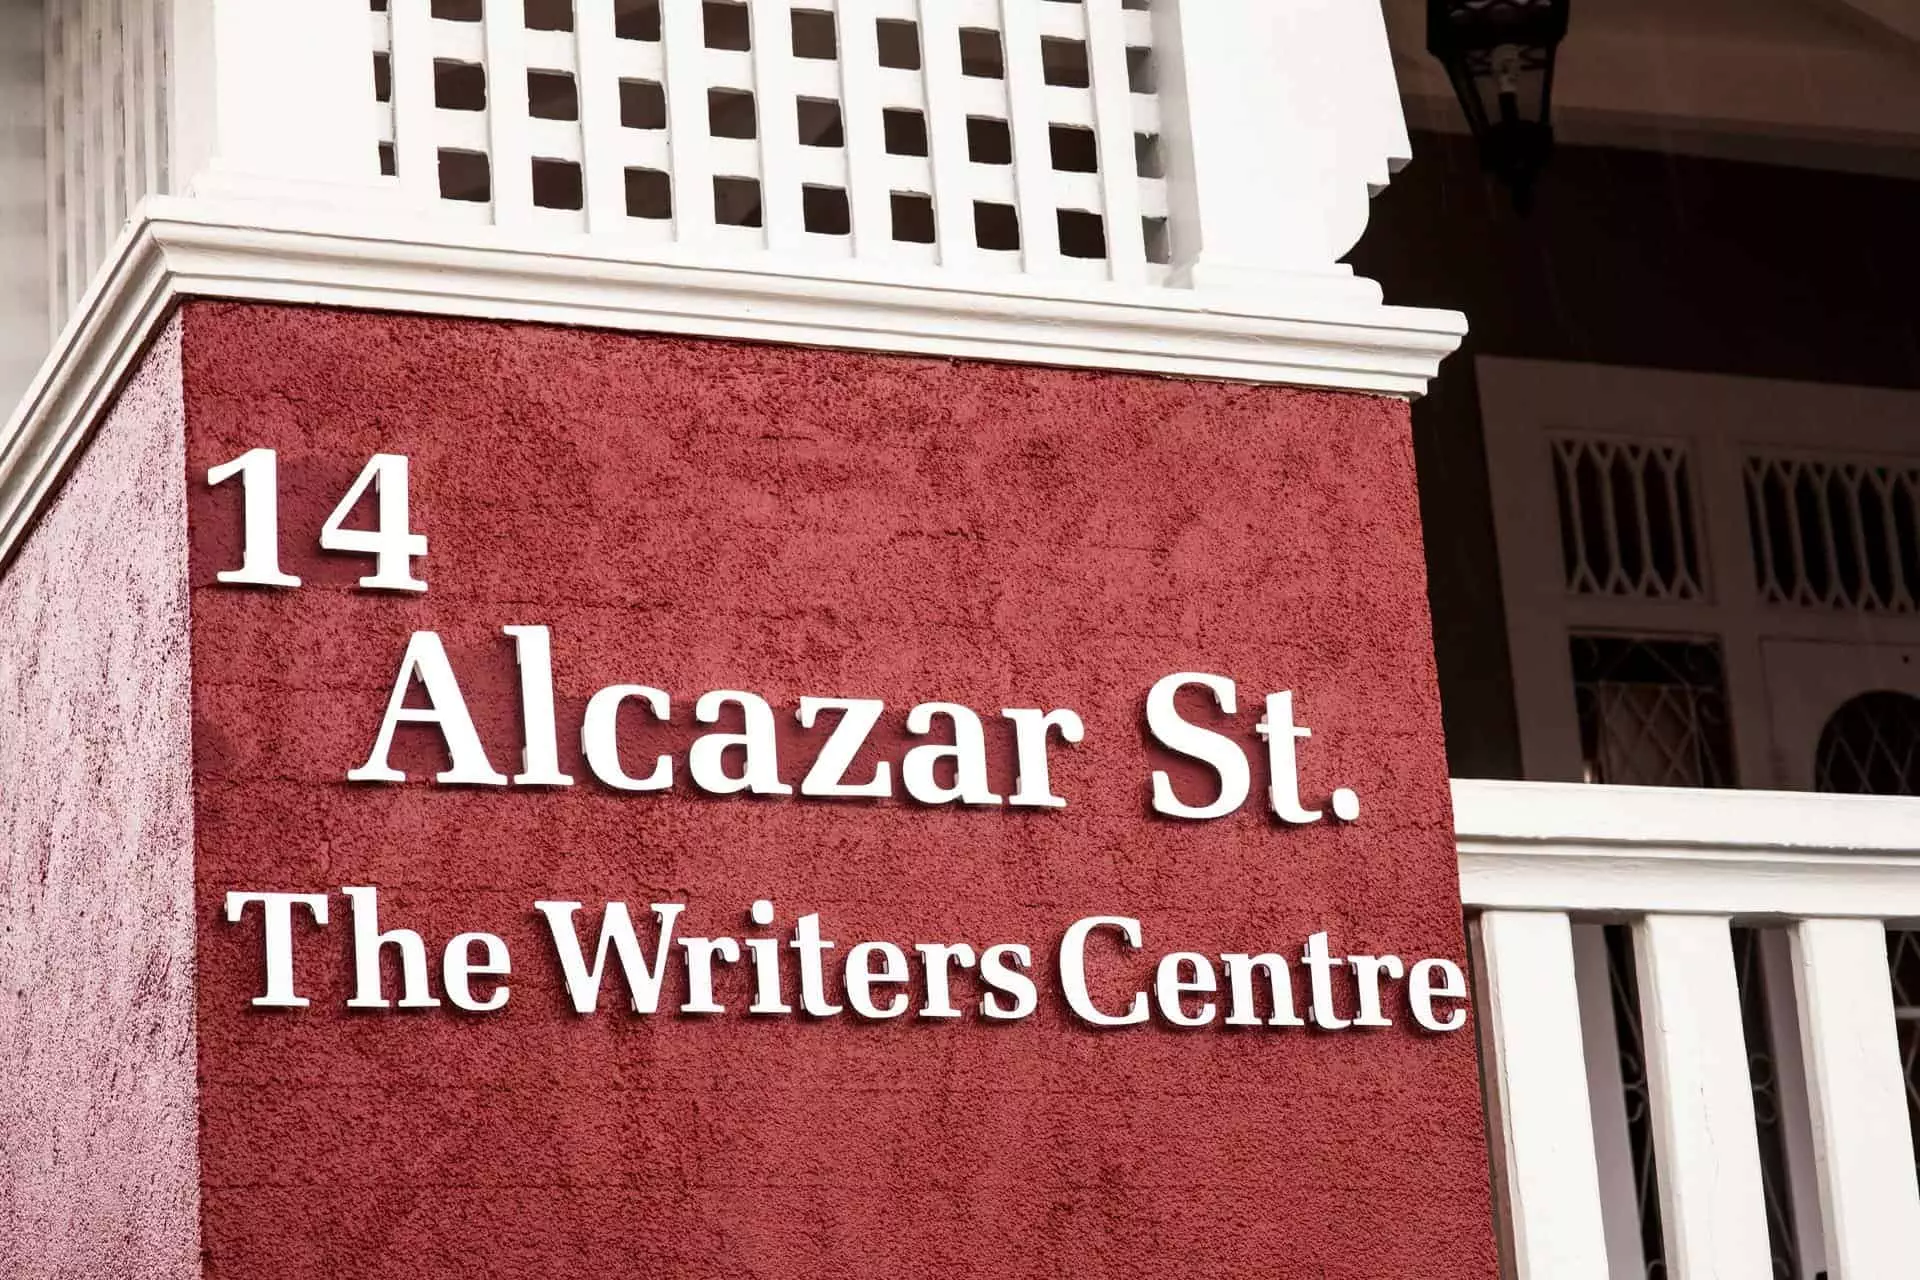 The-Writers-Centre-Photo-1.jpg